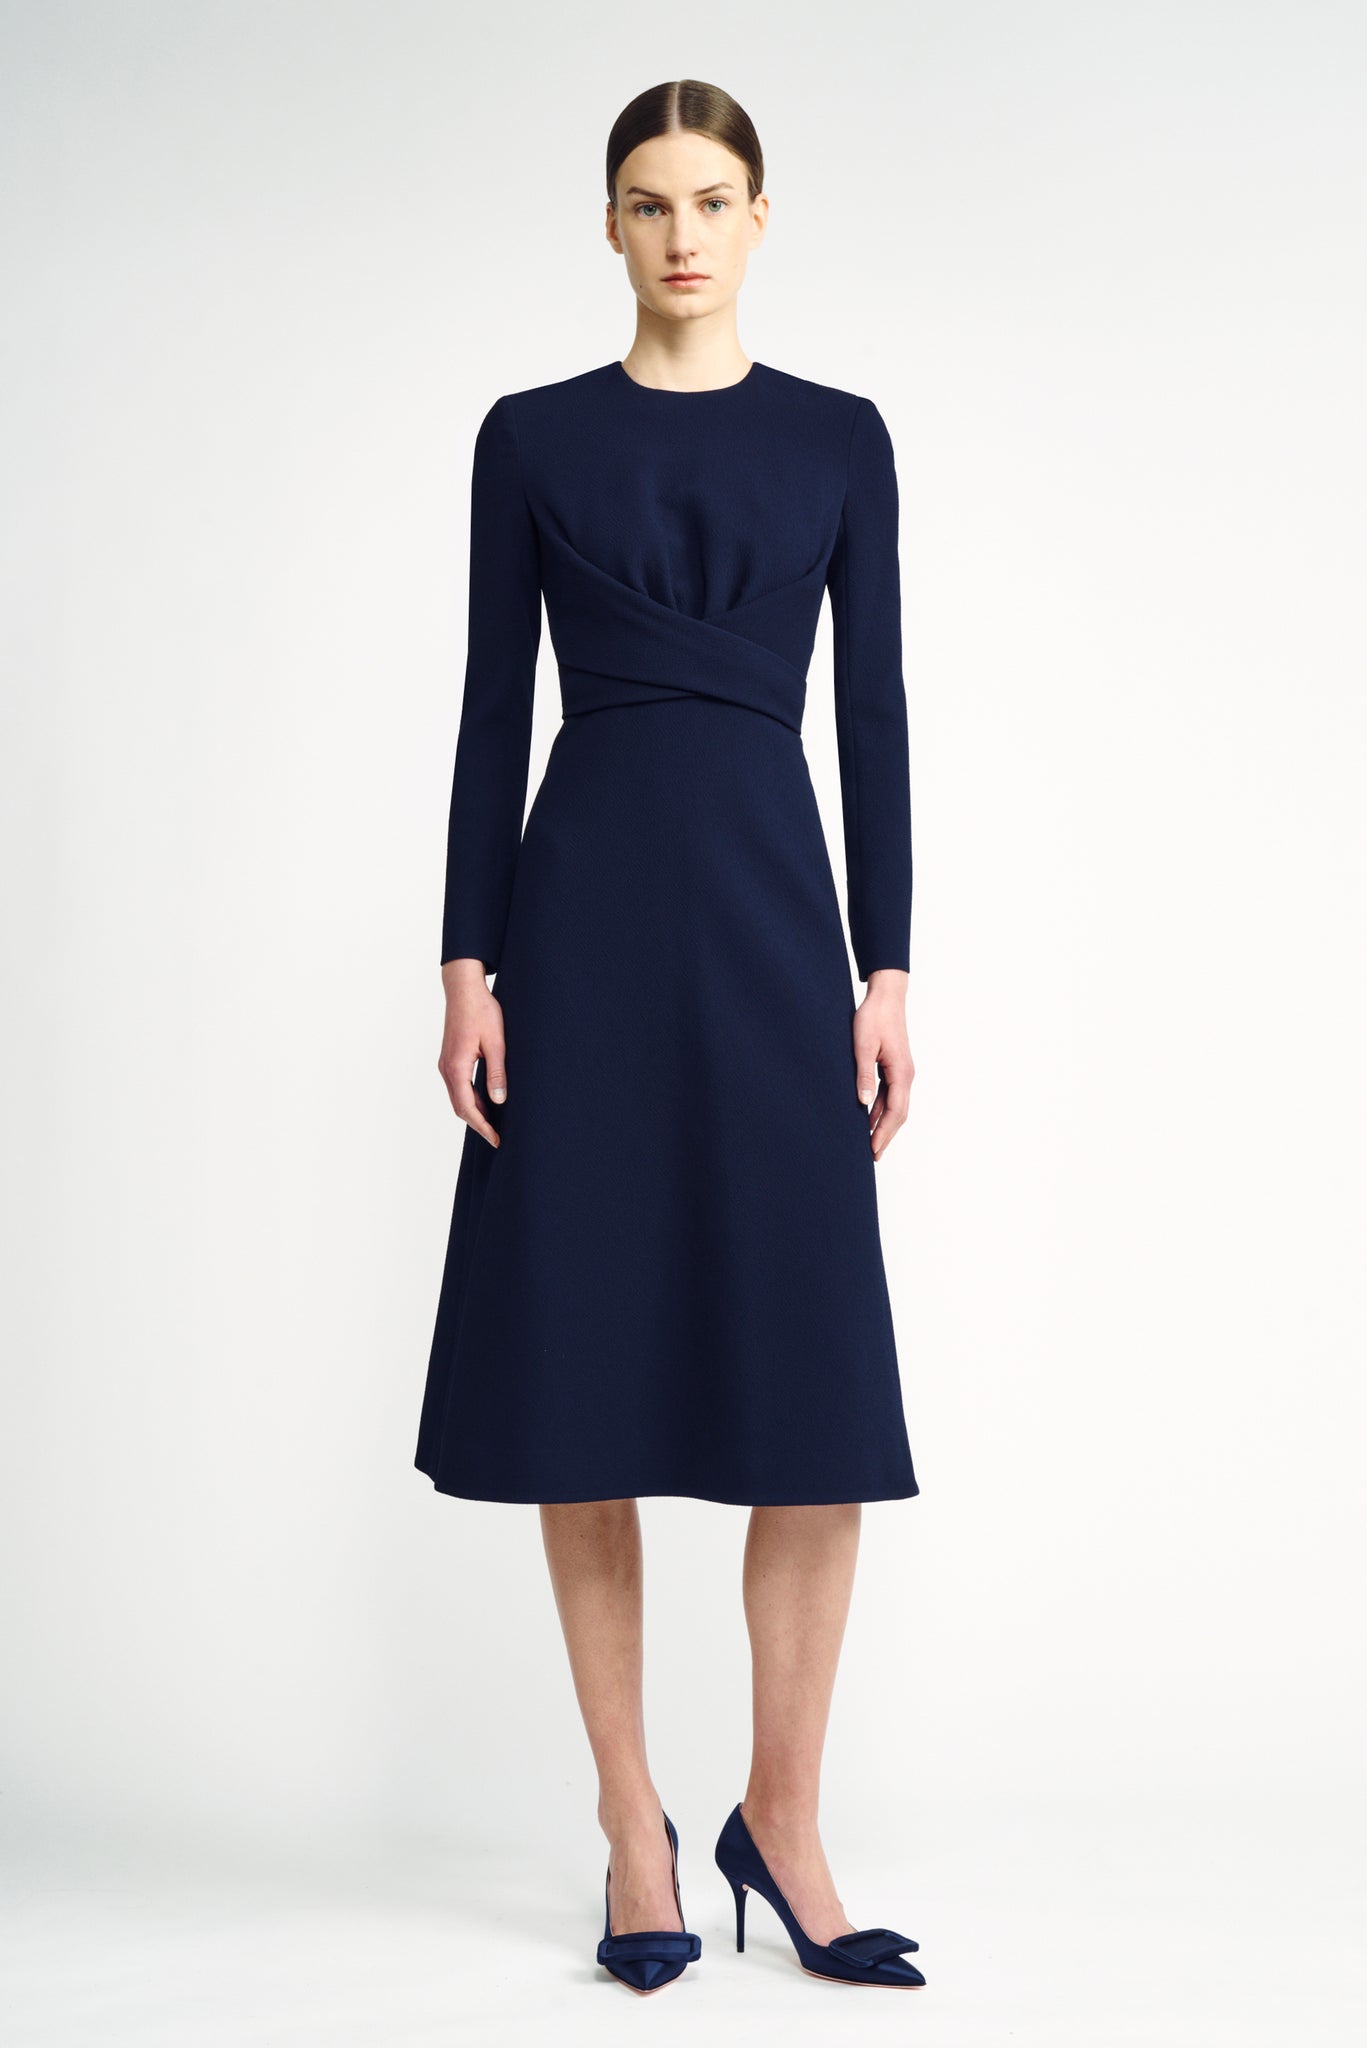 Elta Dress | Navy Blue Long Sleeve Fit-and-Flare Dress | Emilia Wickstead